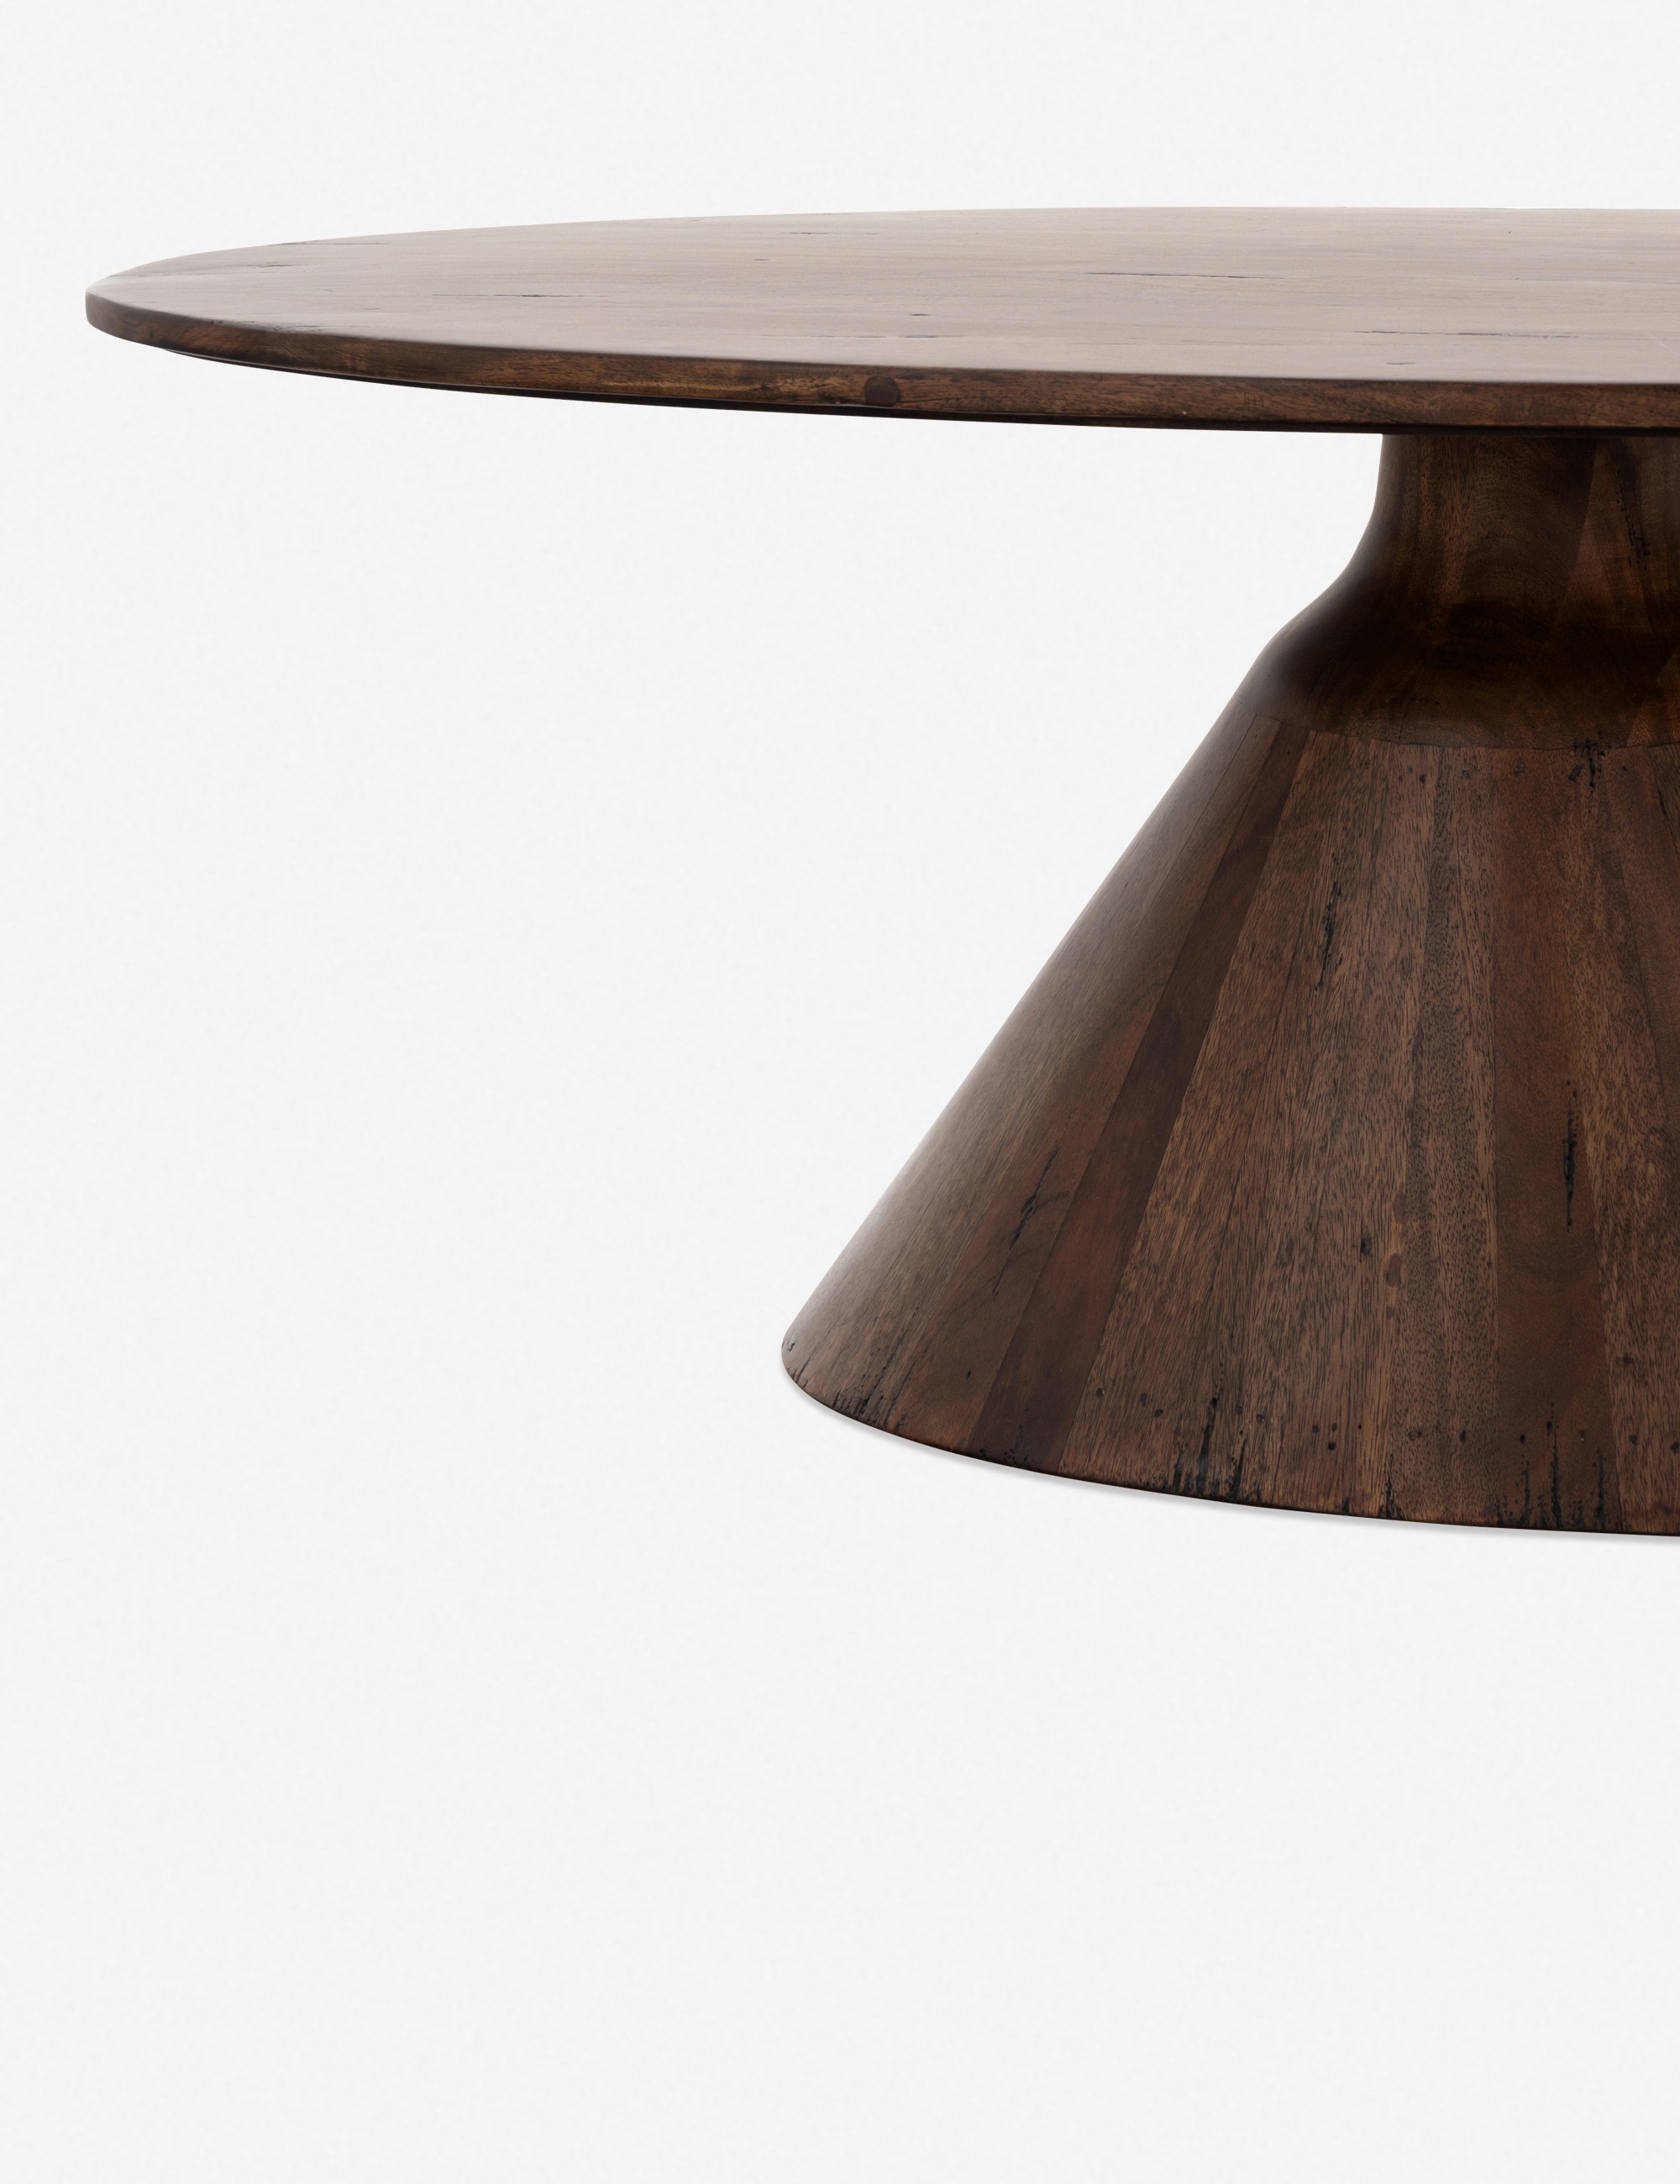 Armand Oval Coffee Table - Image 4